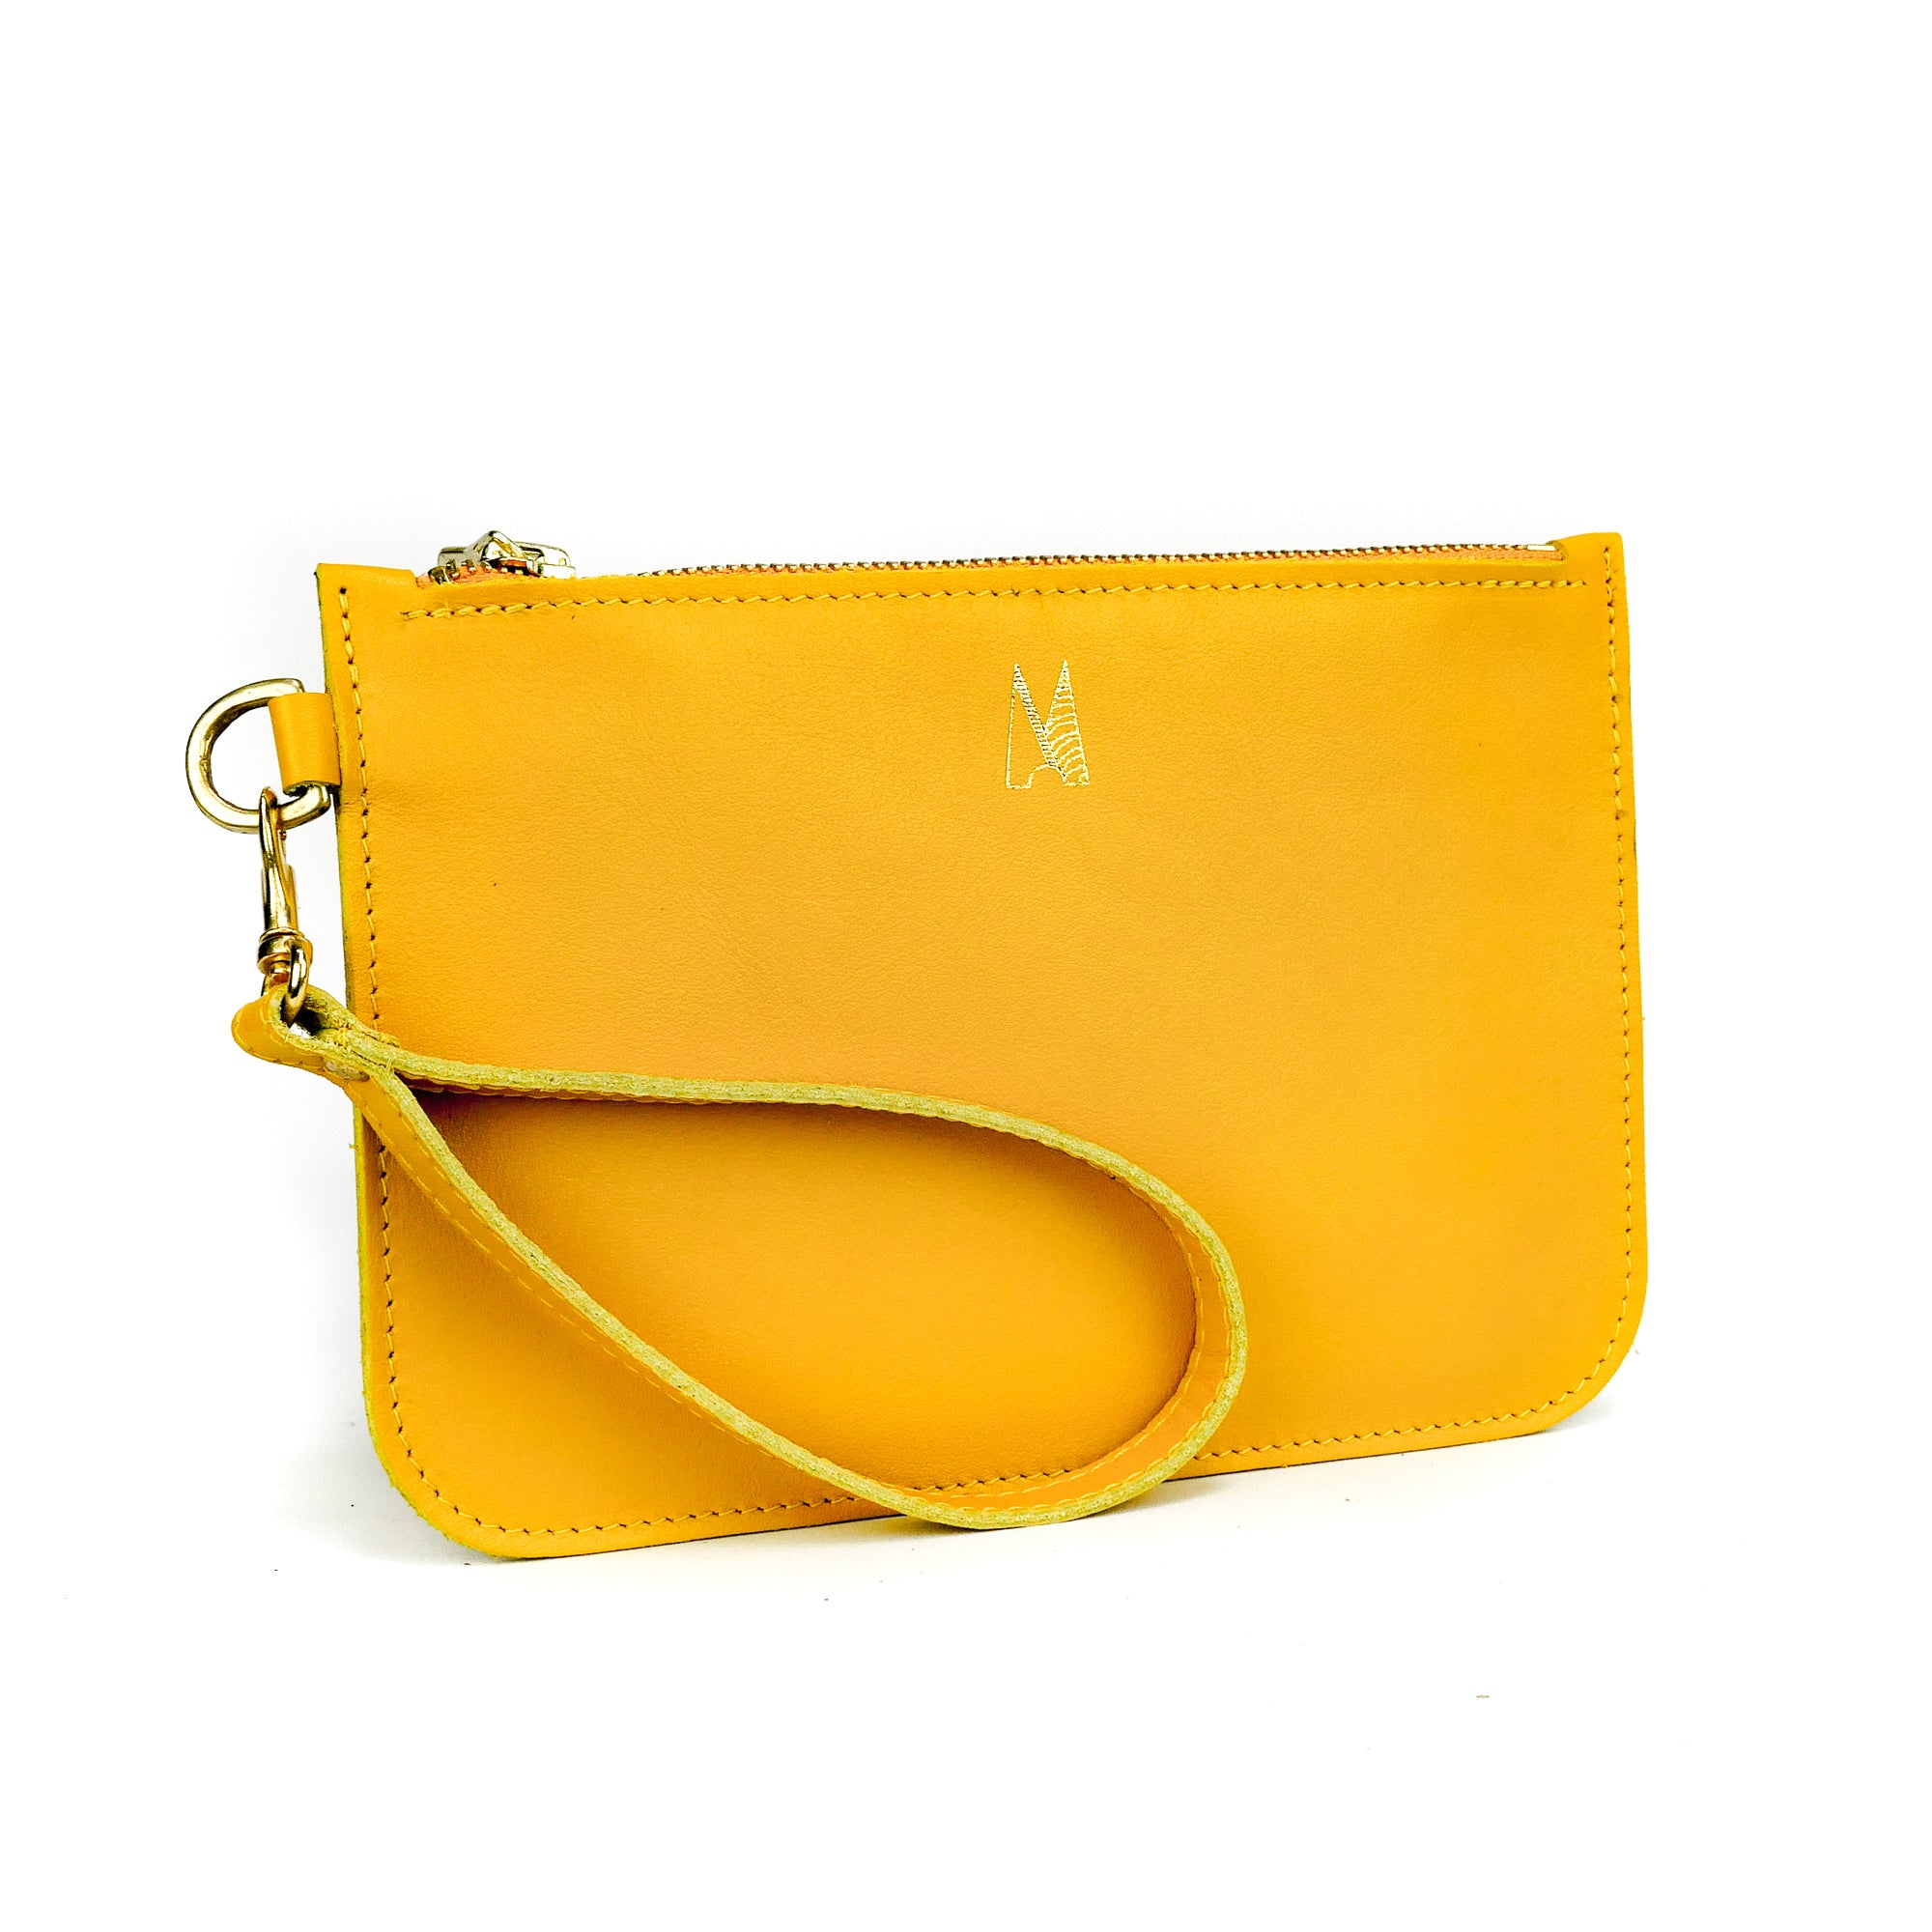 Handmade Leather Wristlet Clutch Bag | Yellow Wristlet Purse in Soft ...